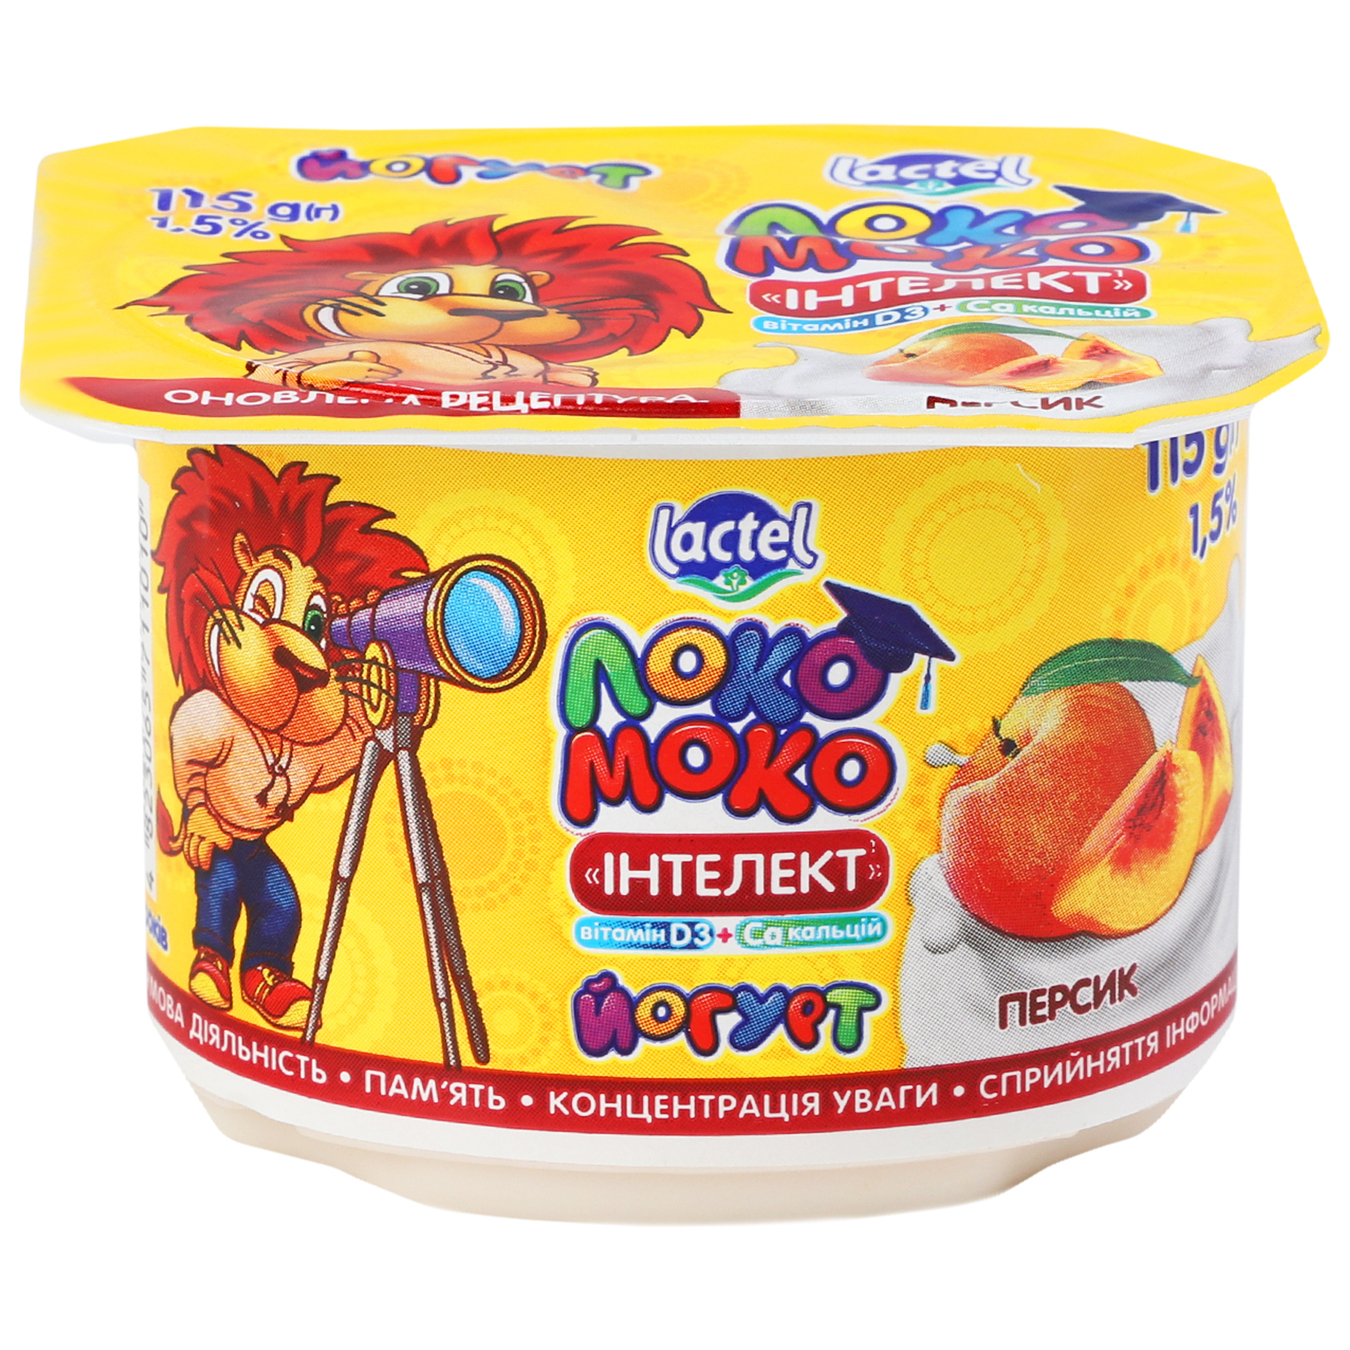 Lactel Loko Moko Peach Flavored Yogurt 1,5% 115g 5